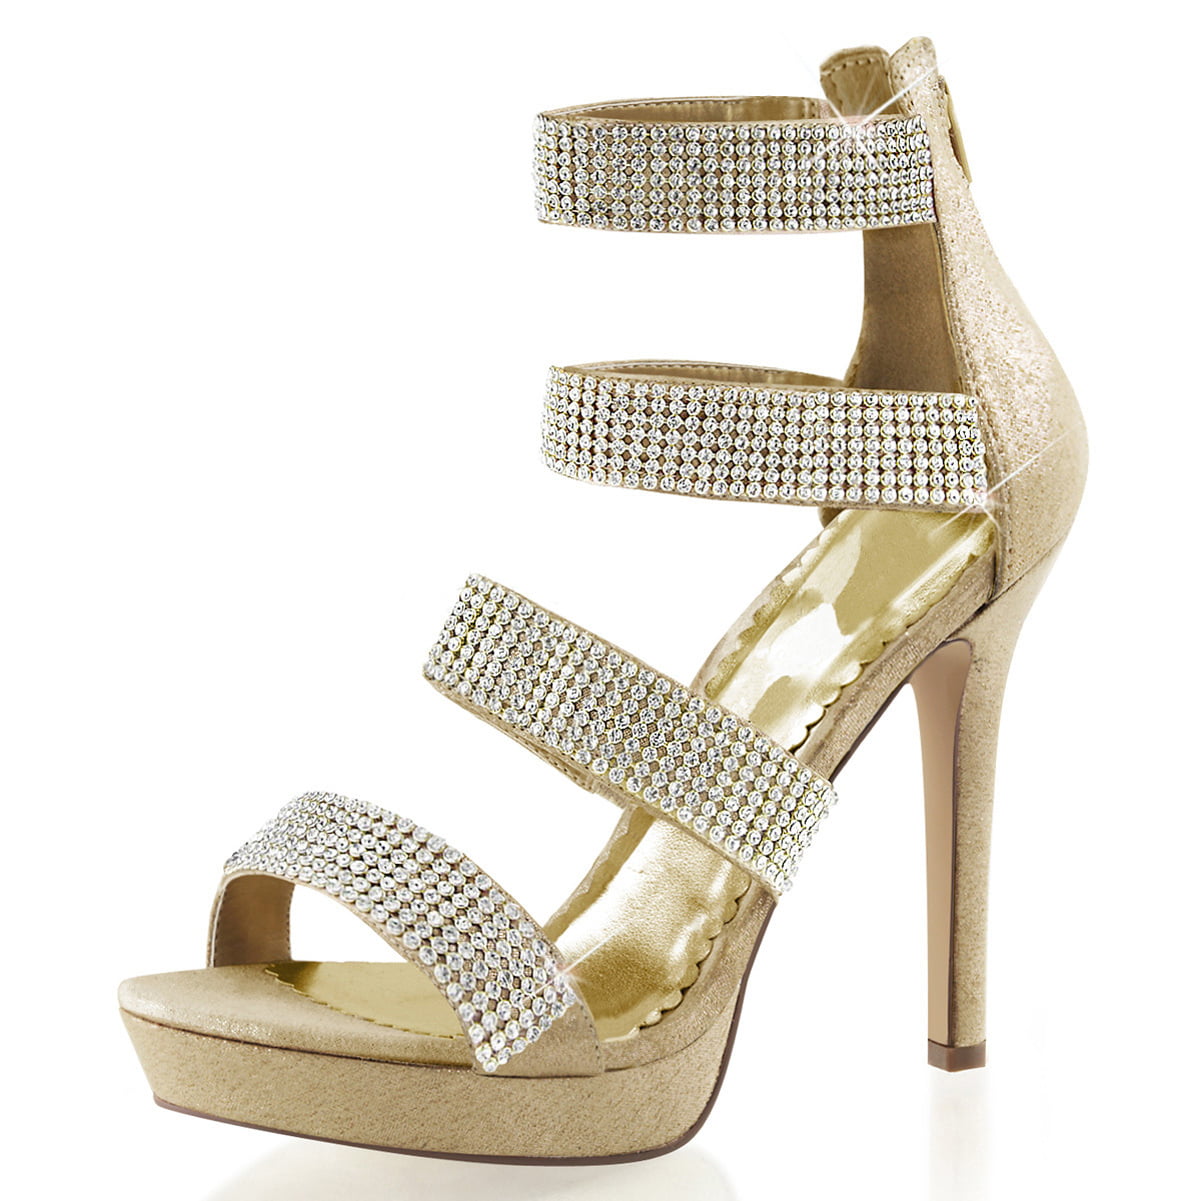 4 inch gold strappy heels